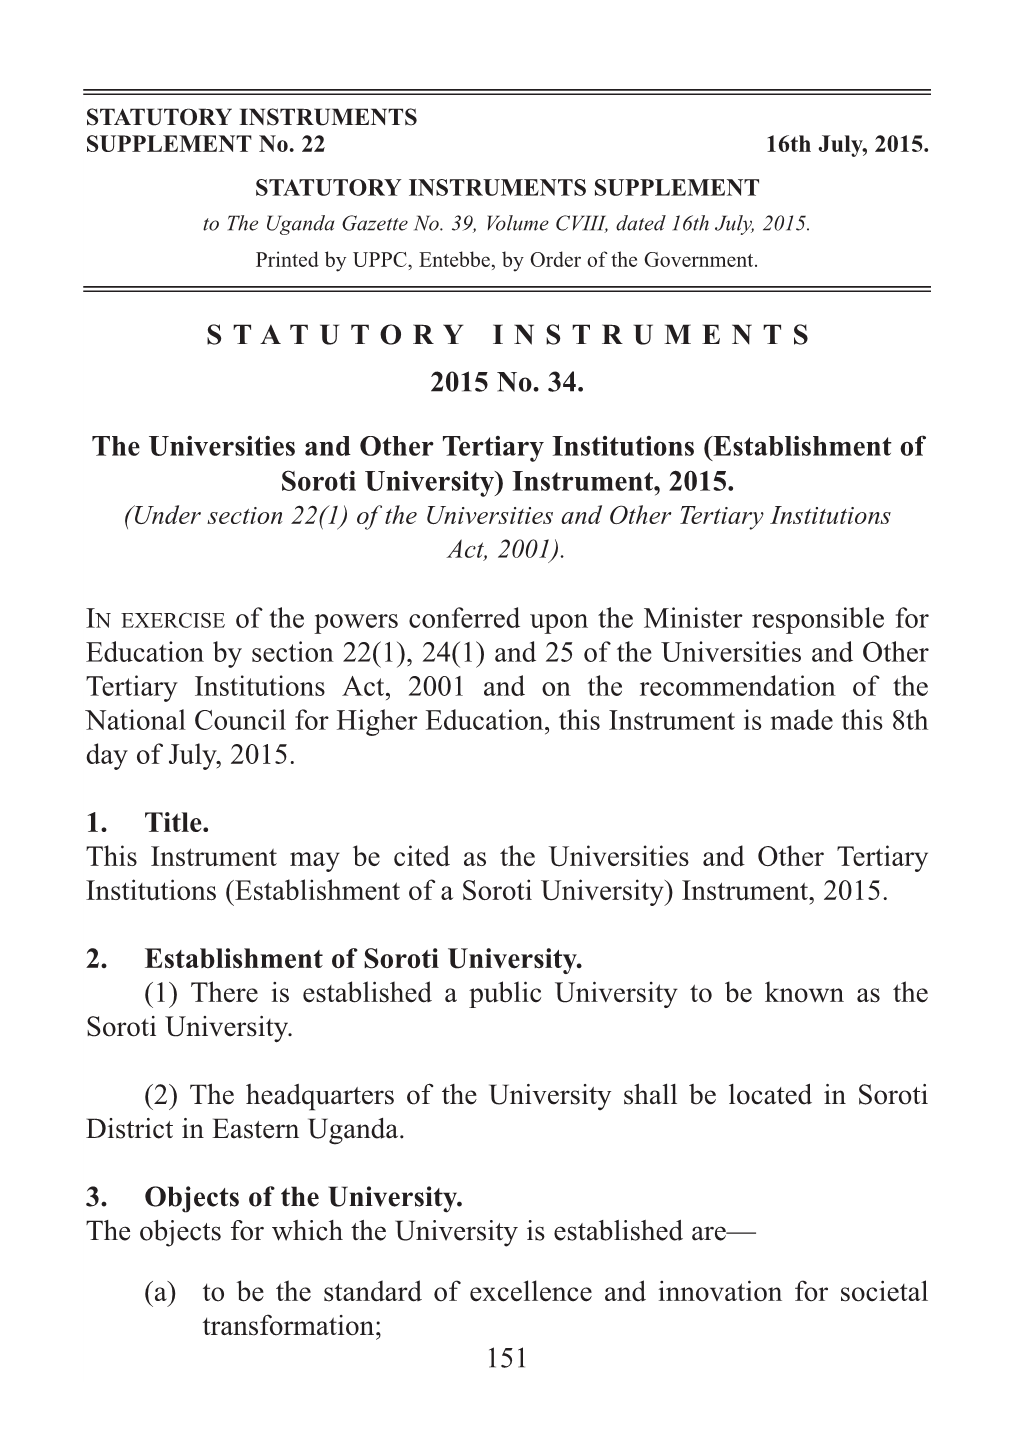 Establishment of Soroti University) Instrument, 2015